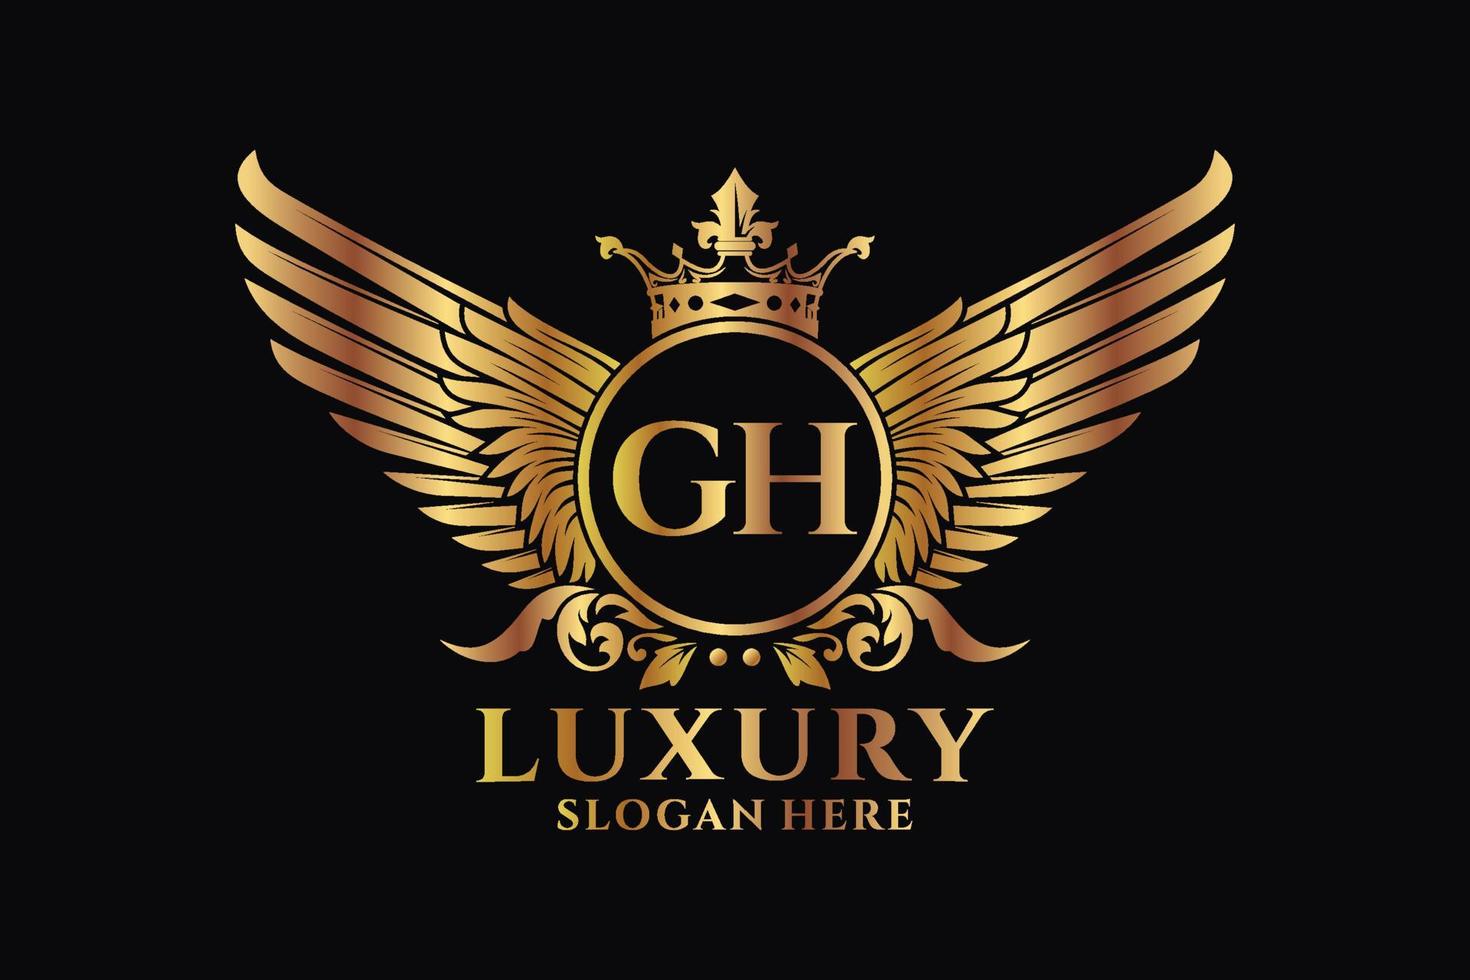 luxe Koninklijk vleugel brief gh kam goud kleur logo vector, zege logo, kam logo, vleugel logo, vector logo sjabloon.